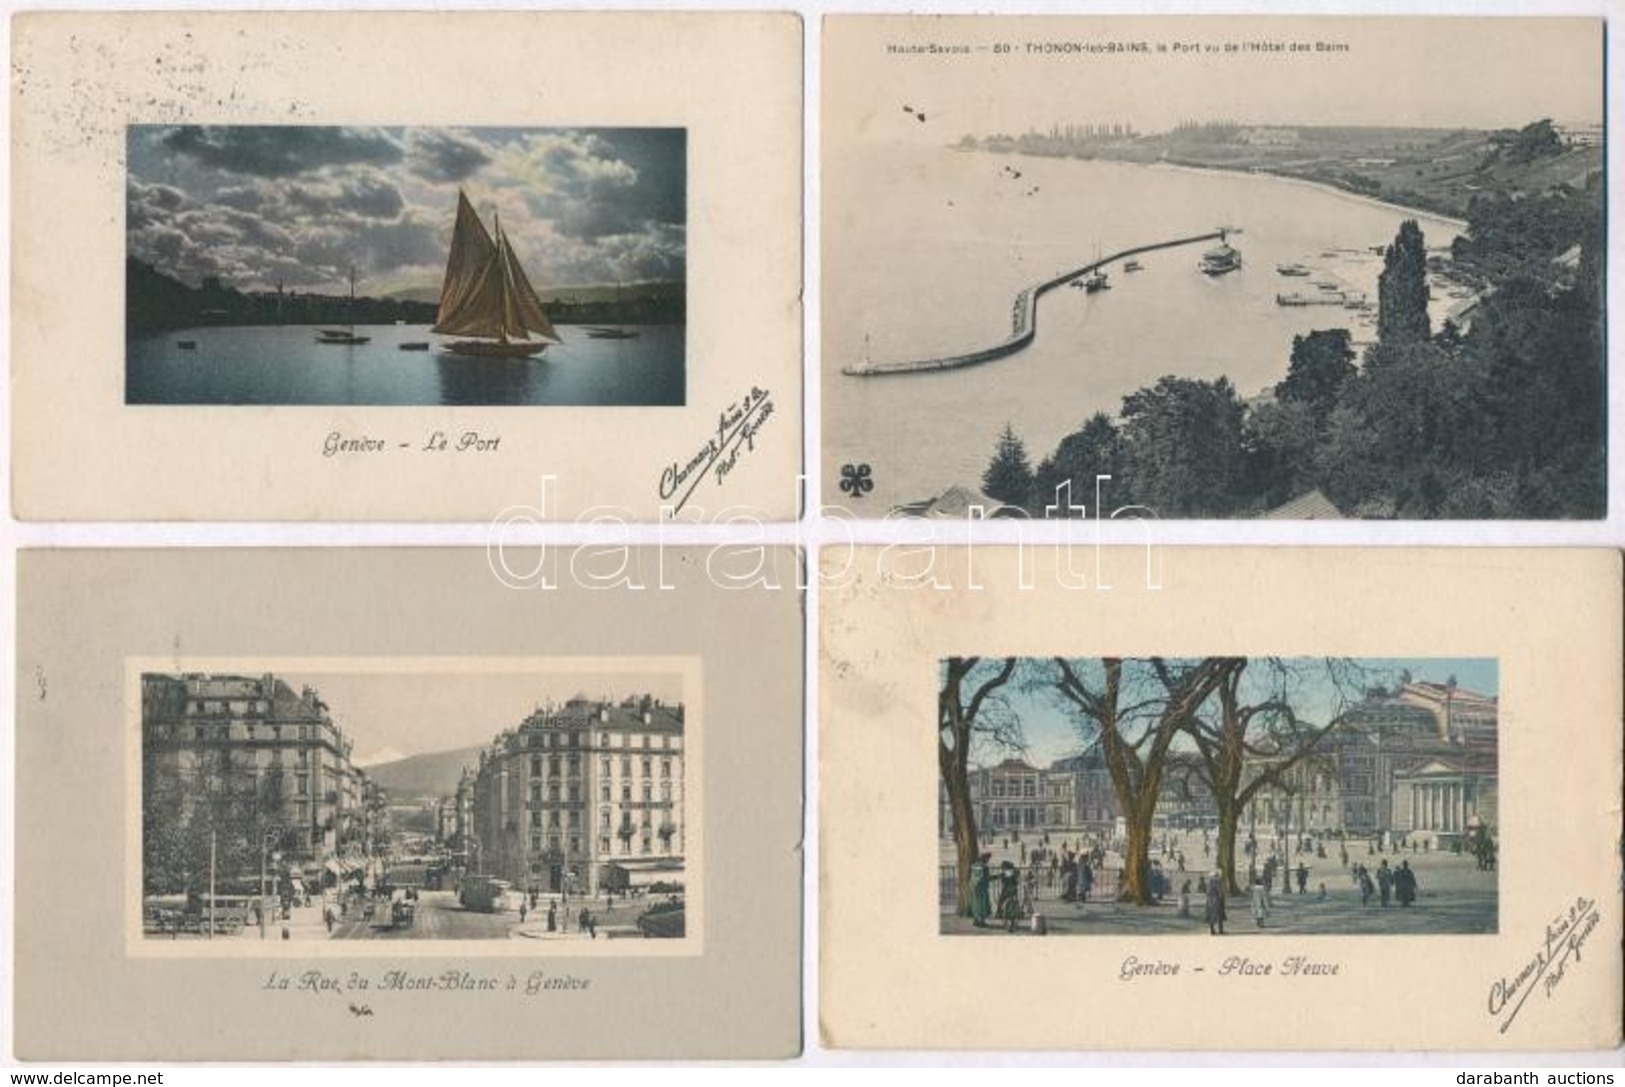 ** * 40 Db RÉGI Főleg Svájci Városképes Lap / 40 Pre-1945 Mostly Swiss Town-view Postcards - Sin Clasificación